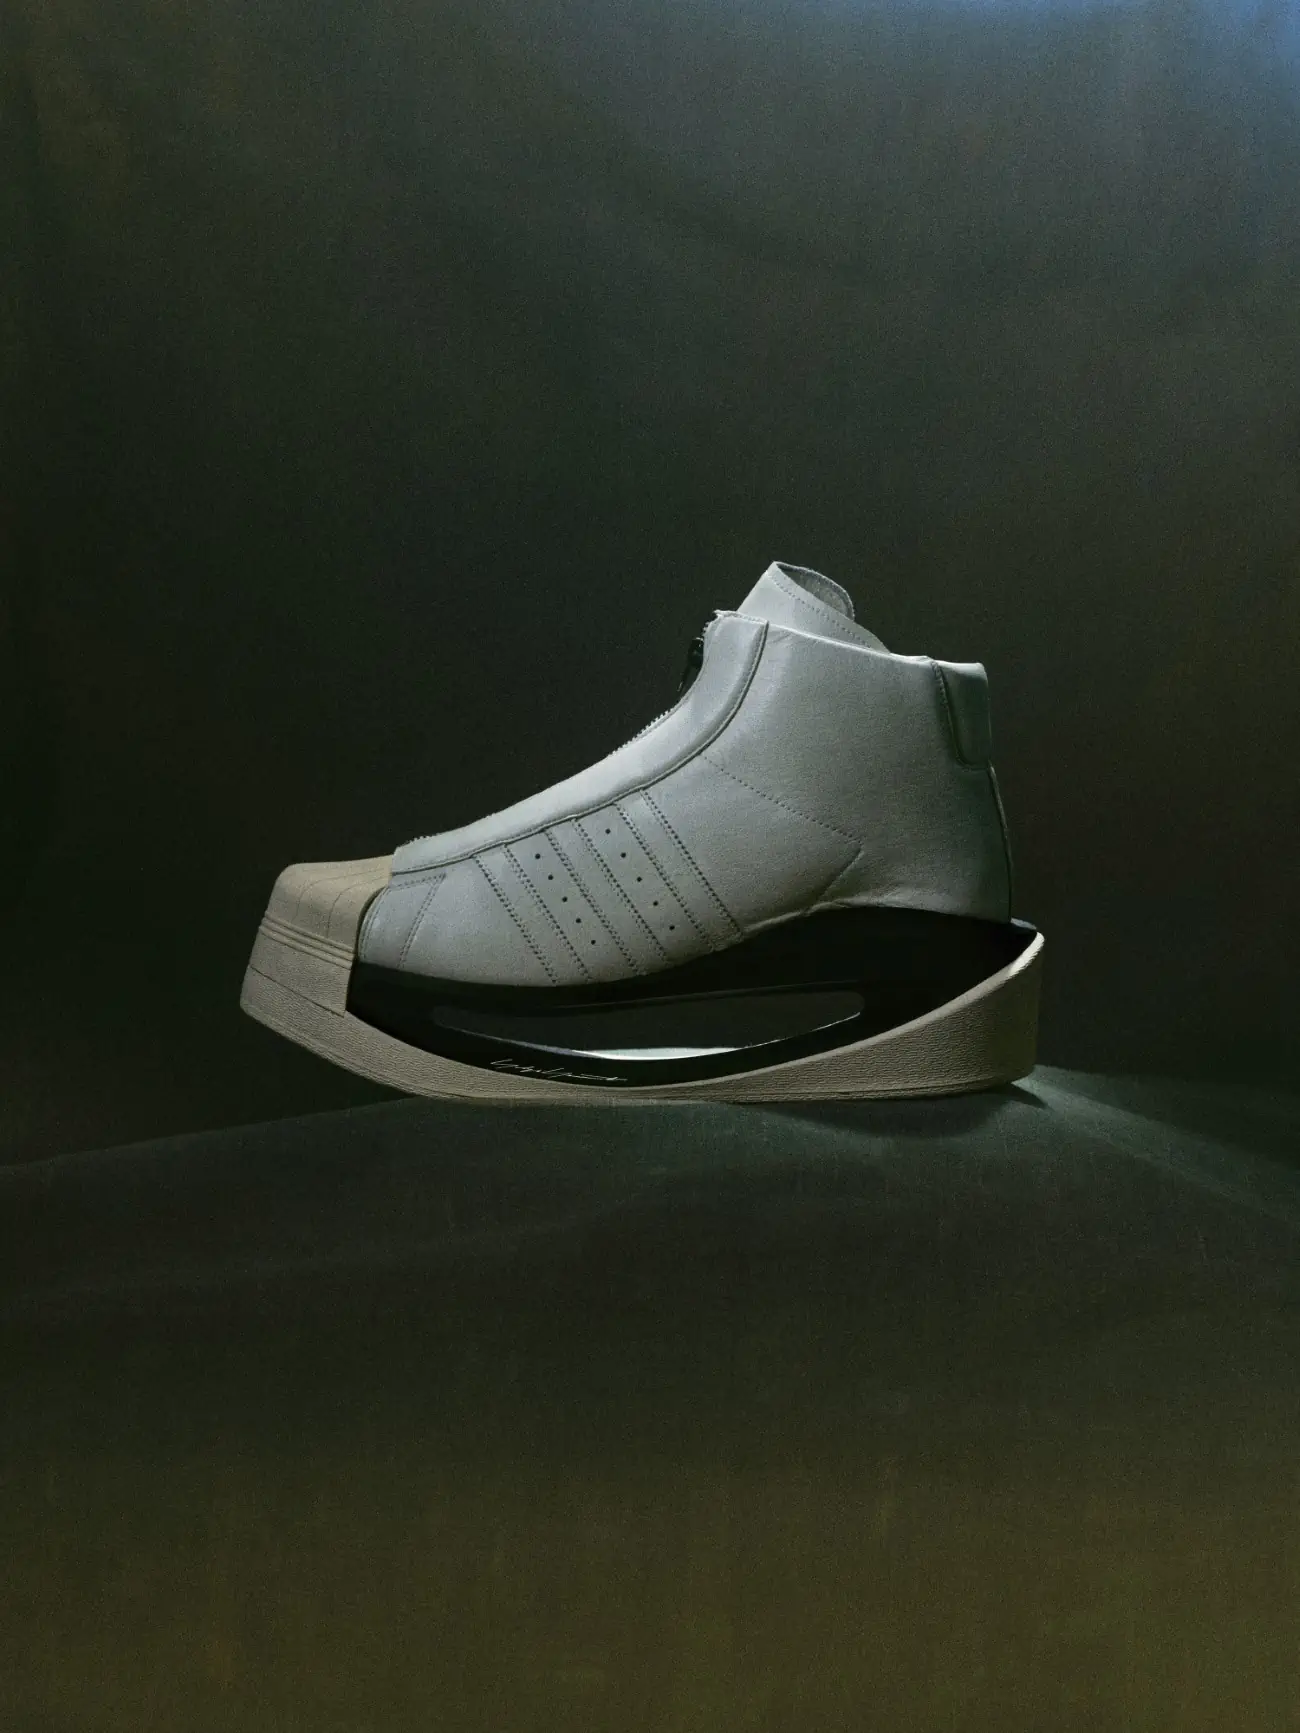 adidas and Yohji Yamamoto present the Y-3 Gendo sneaker